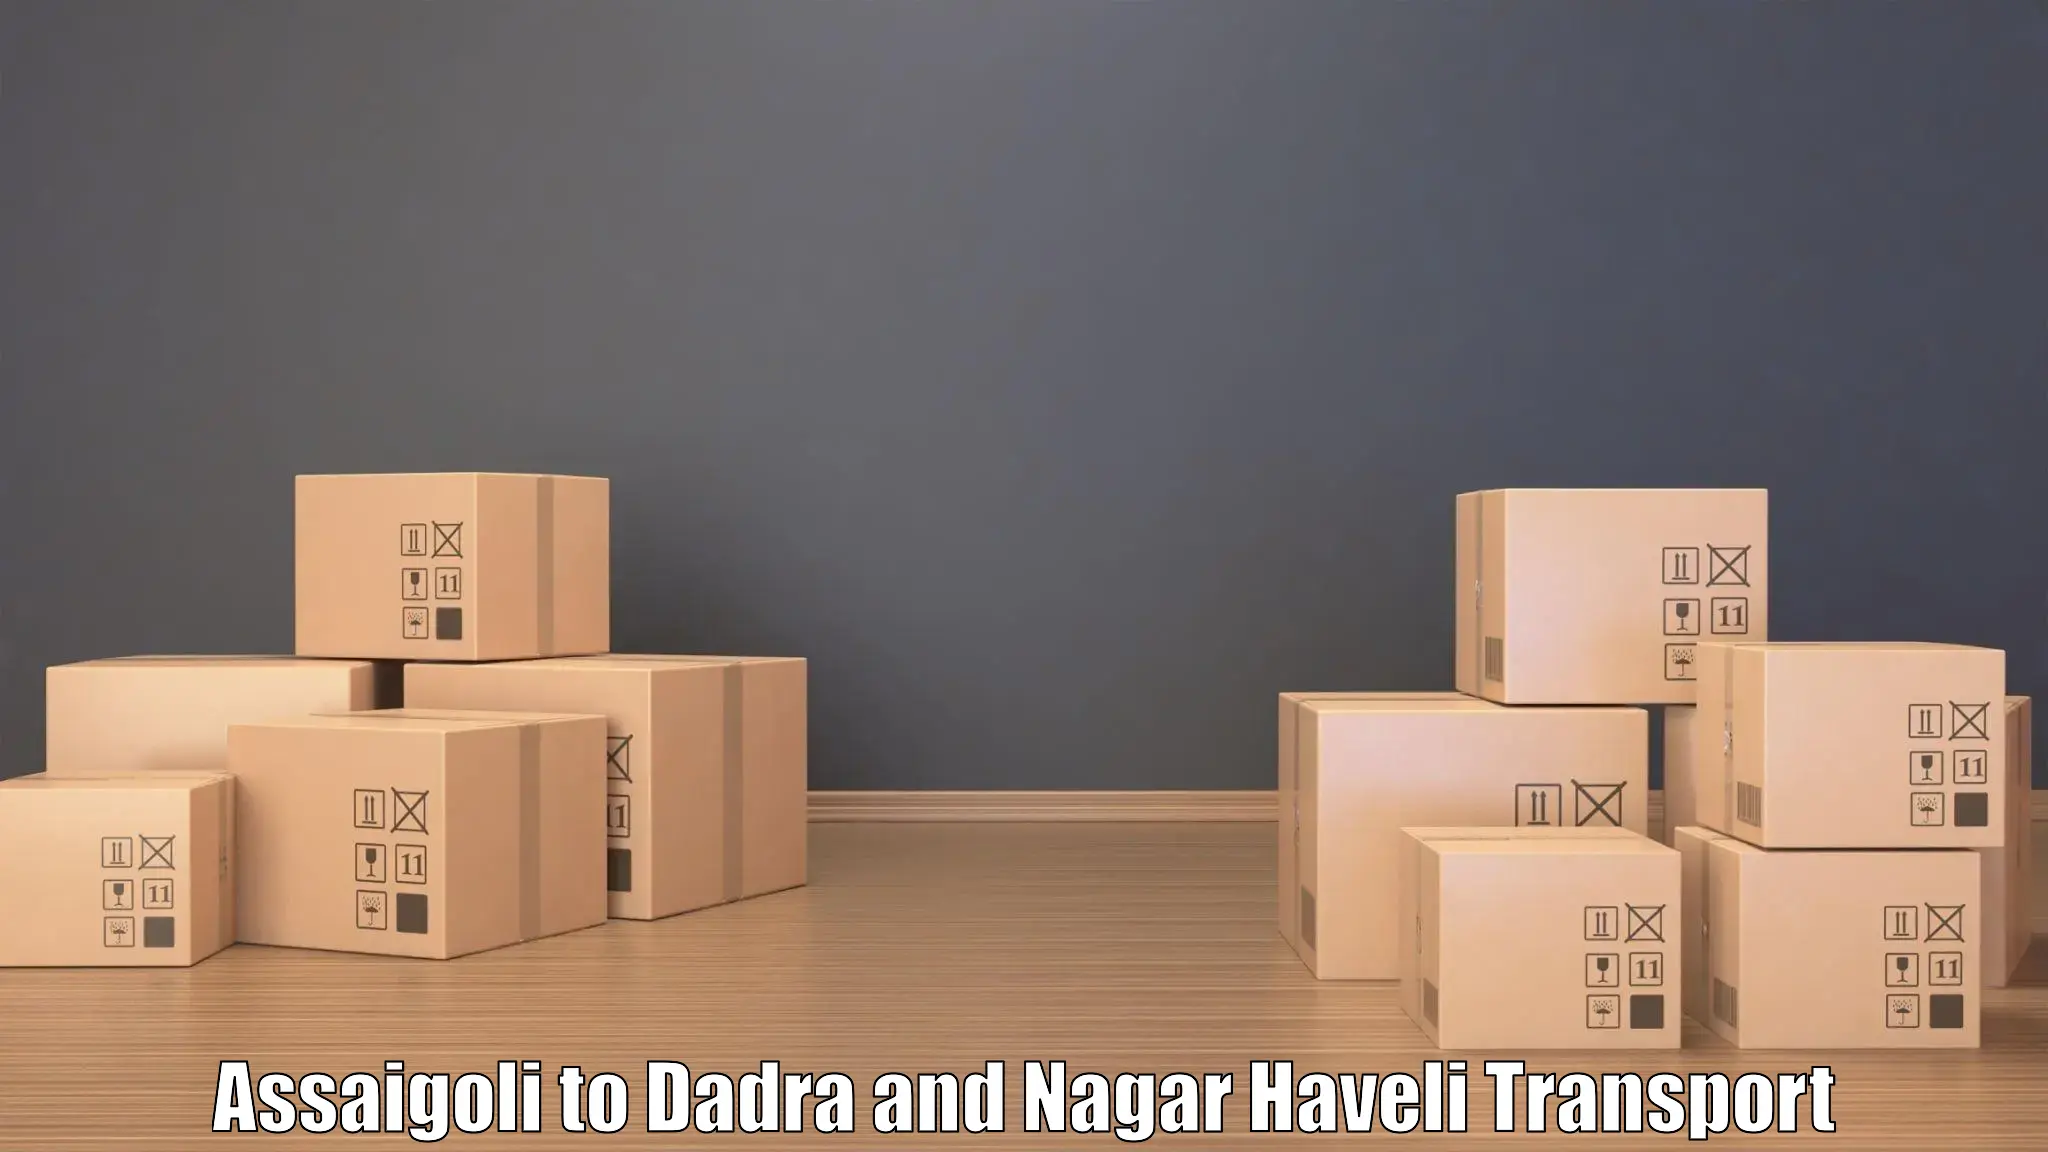 Express transport services Assaigoli to Dadra and Nagar Haveli